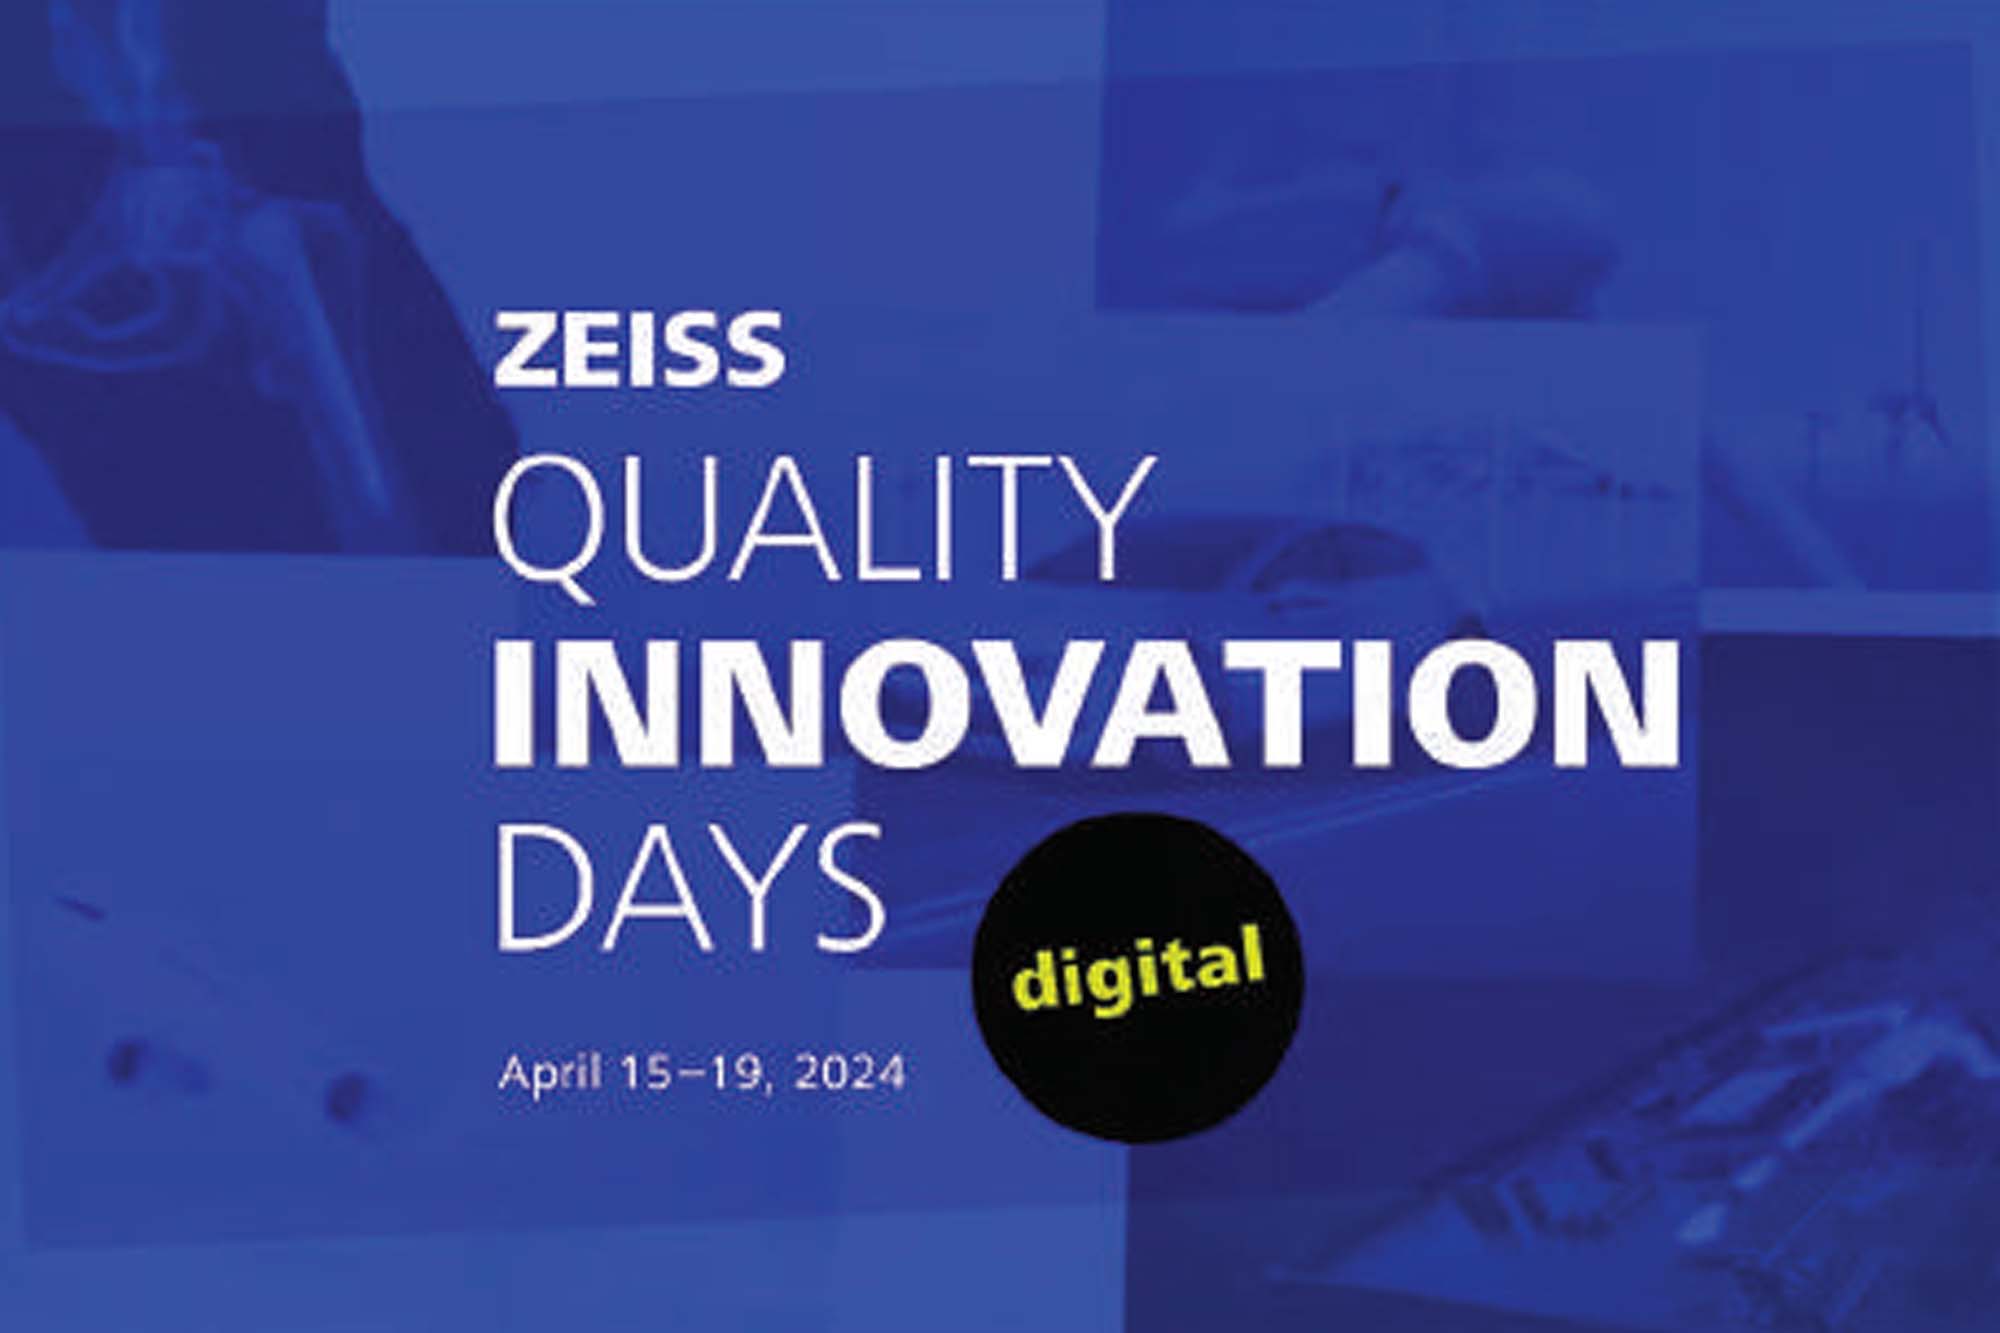 ZEISS to celebrate Quality Innovation Days